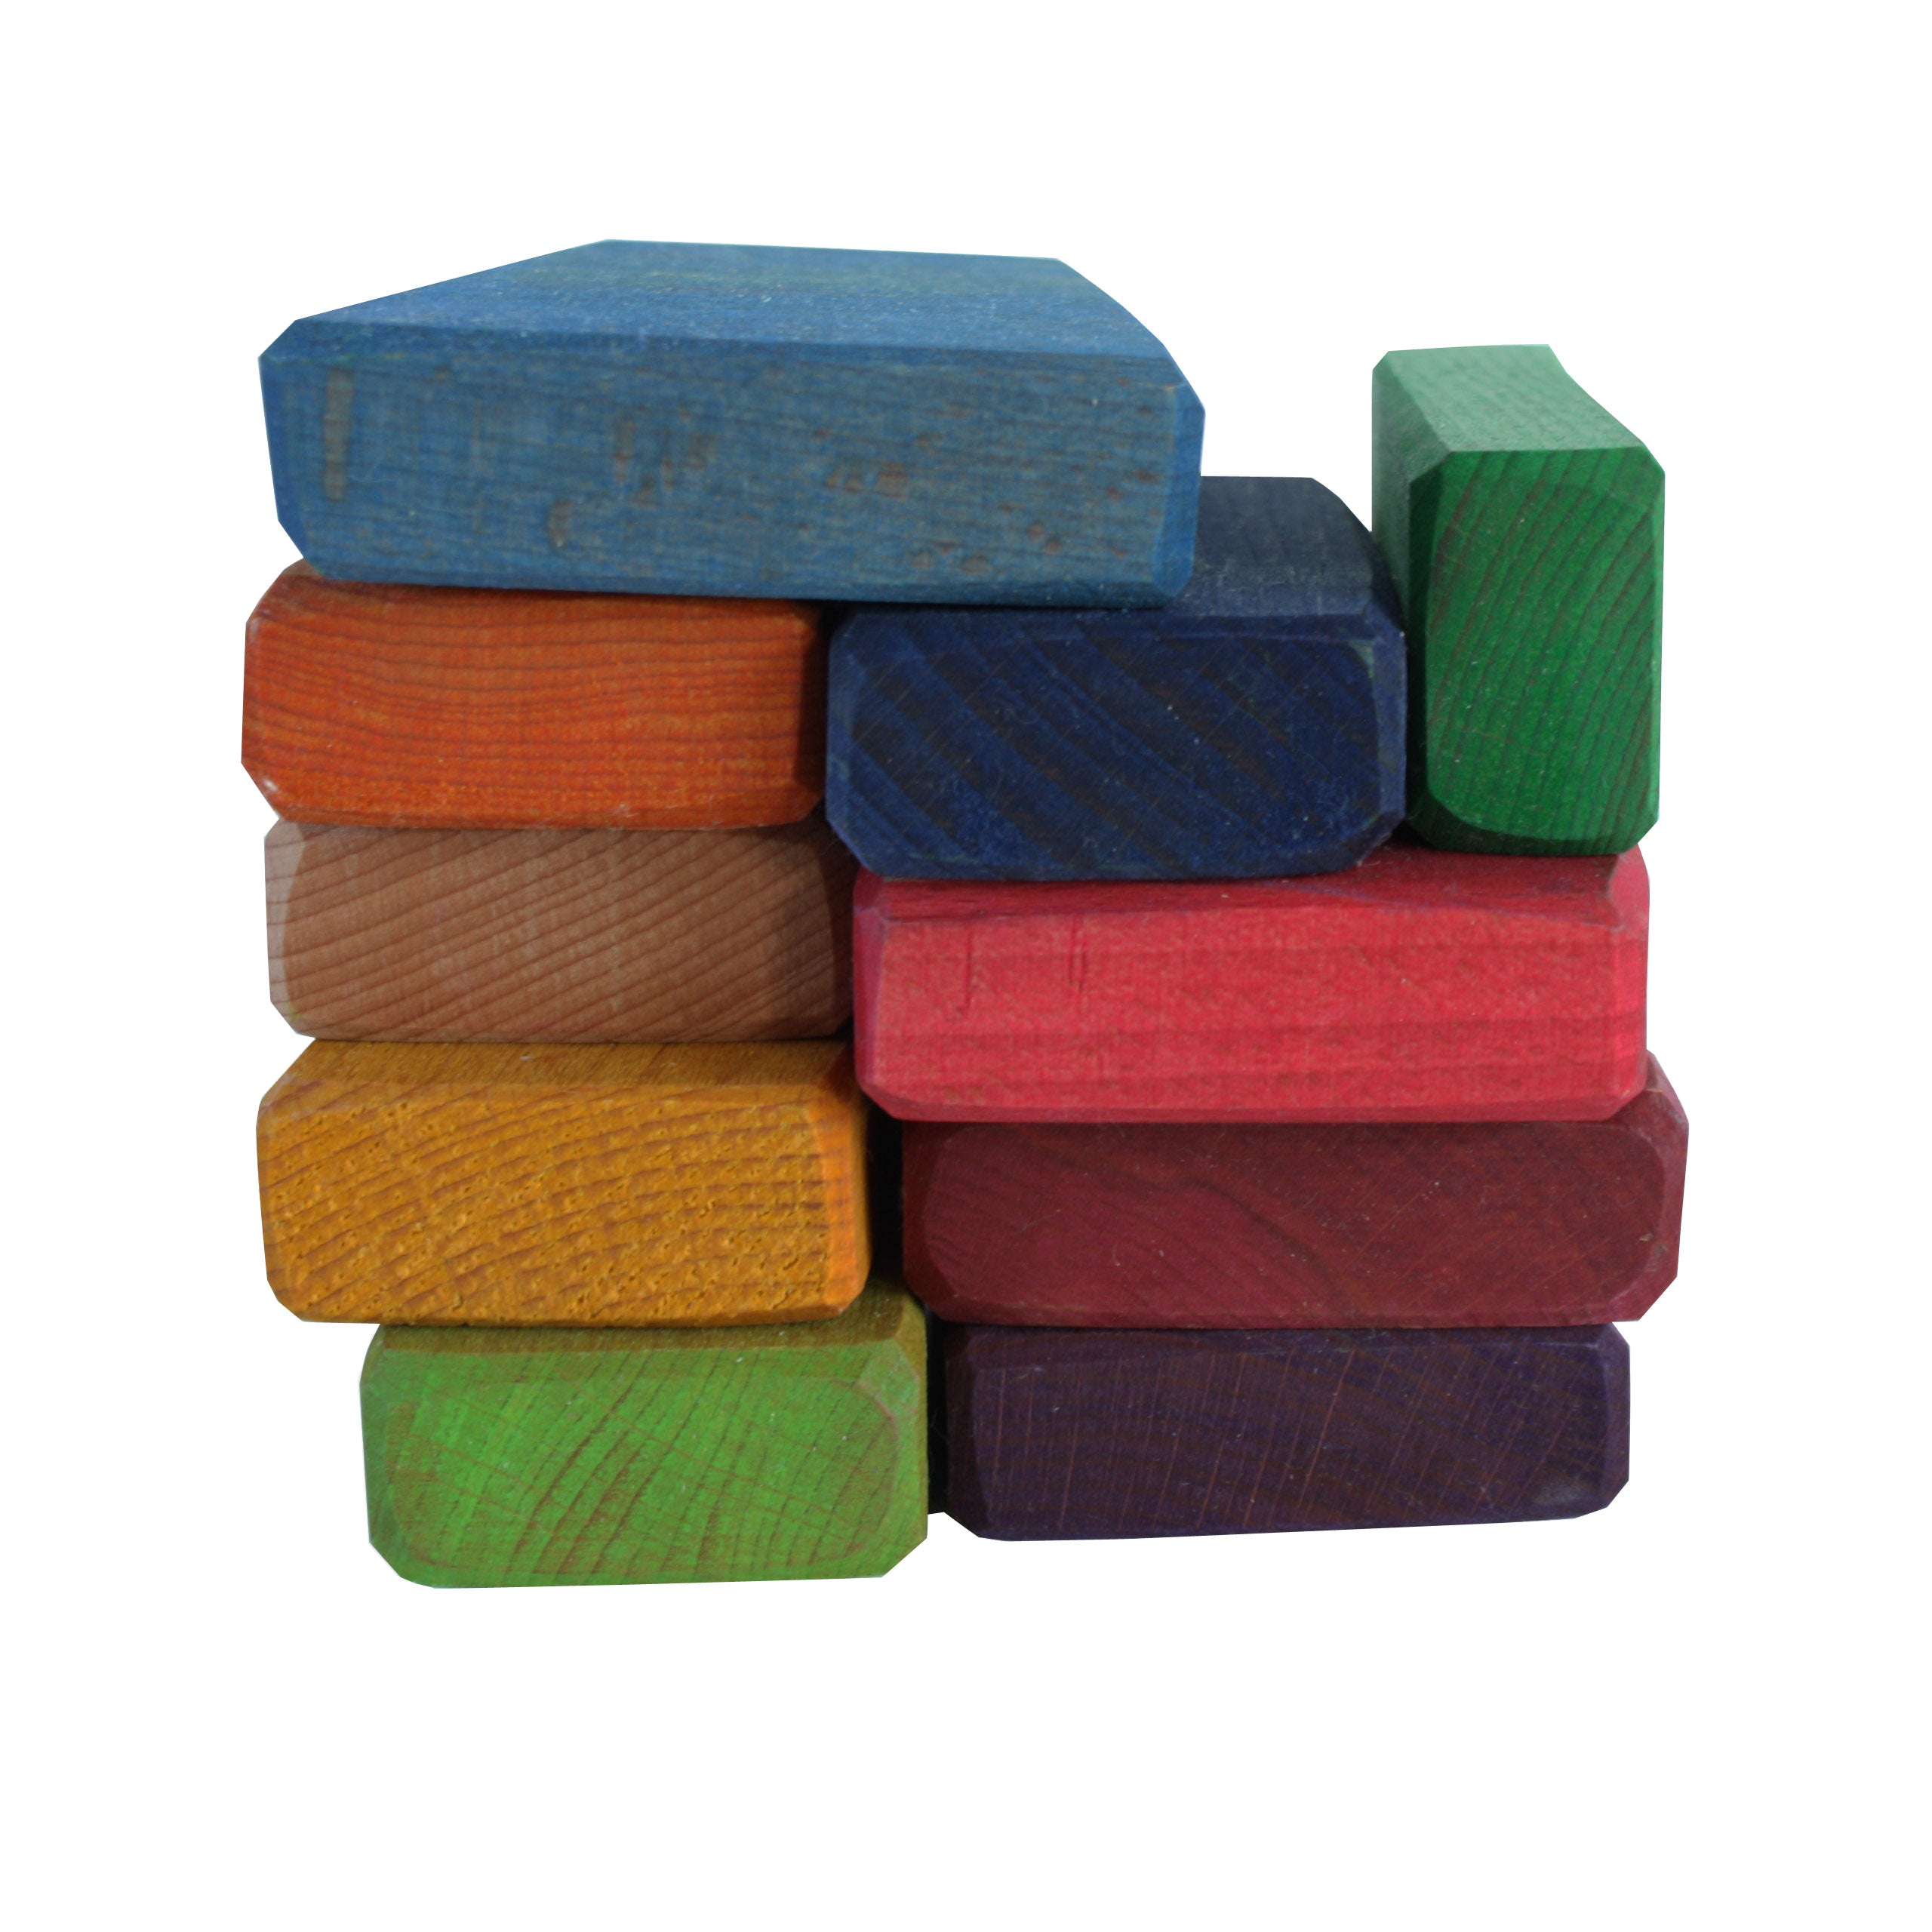 Set of 10 wooden coloured blocks